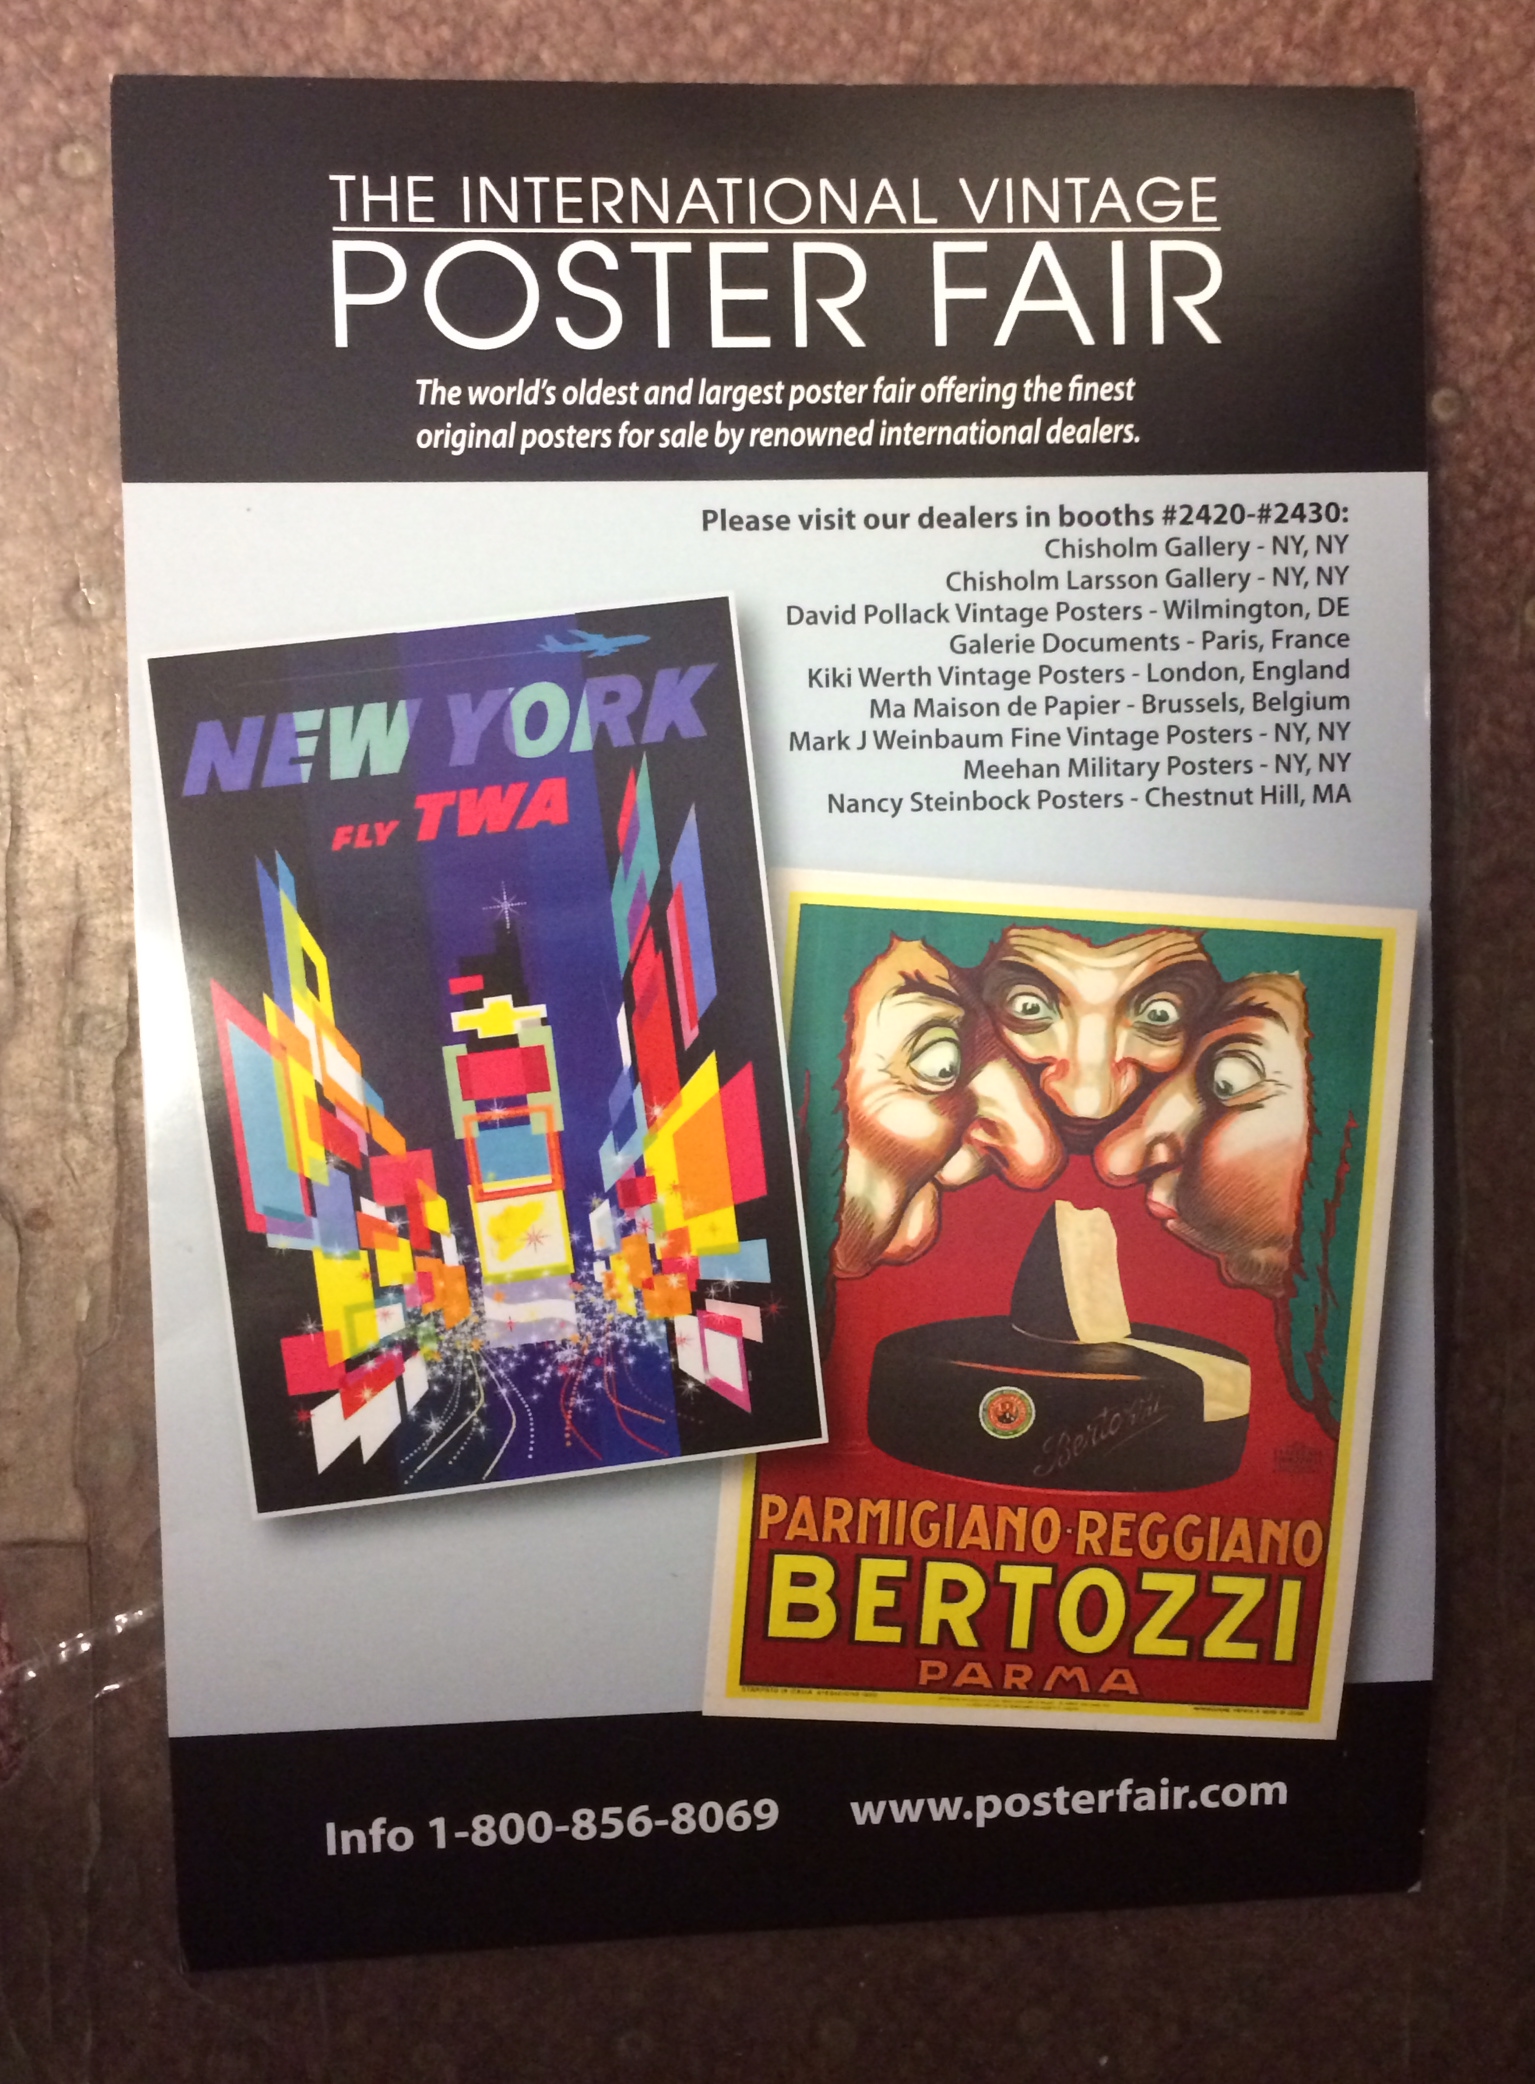 The International Vintage Poster Fair